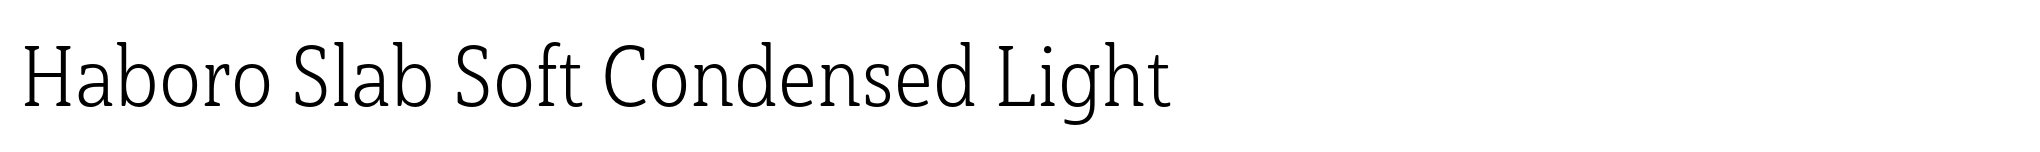 Haboro Slab Soft Condensed Light image